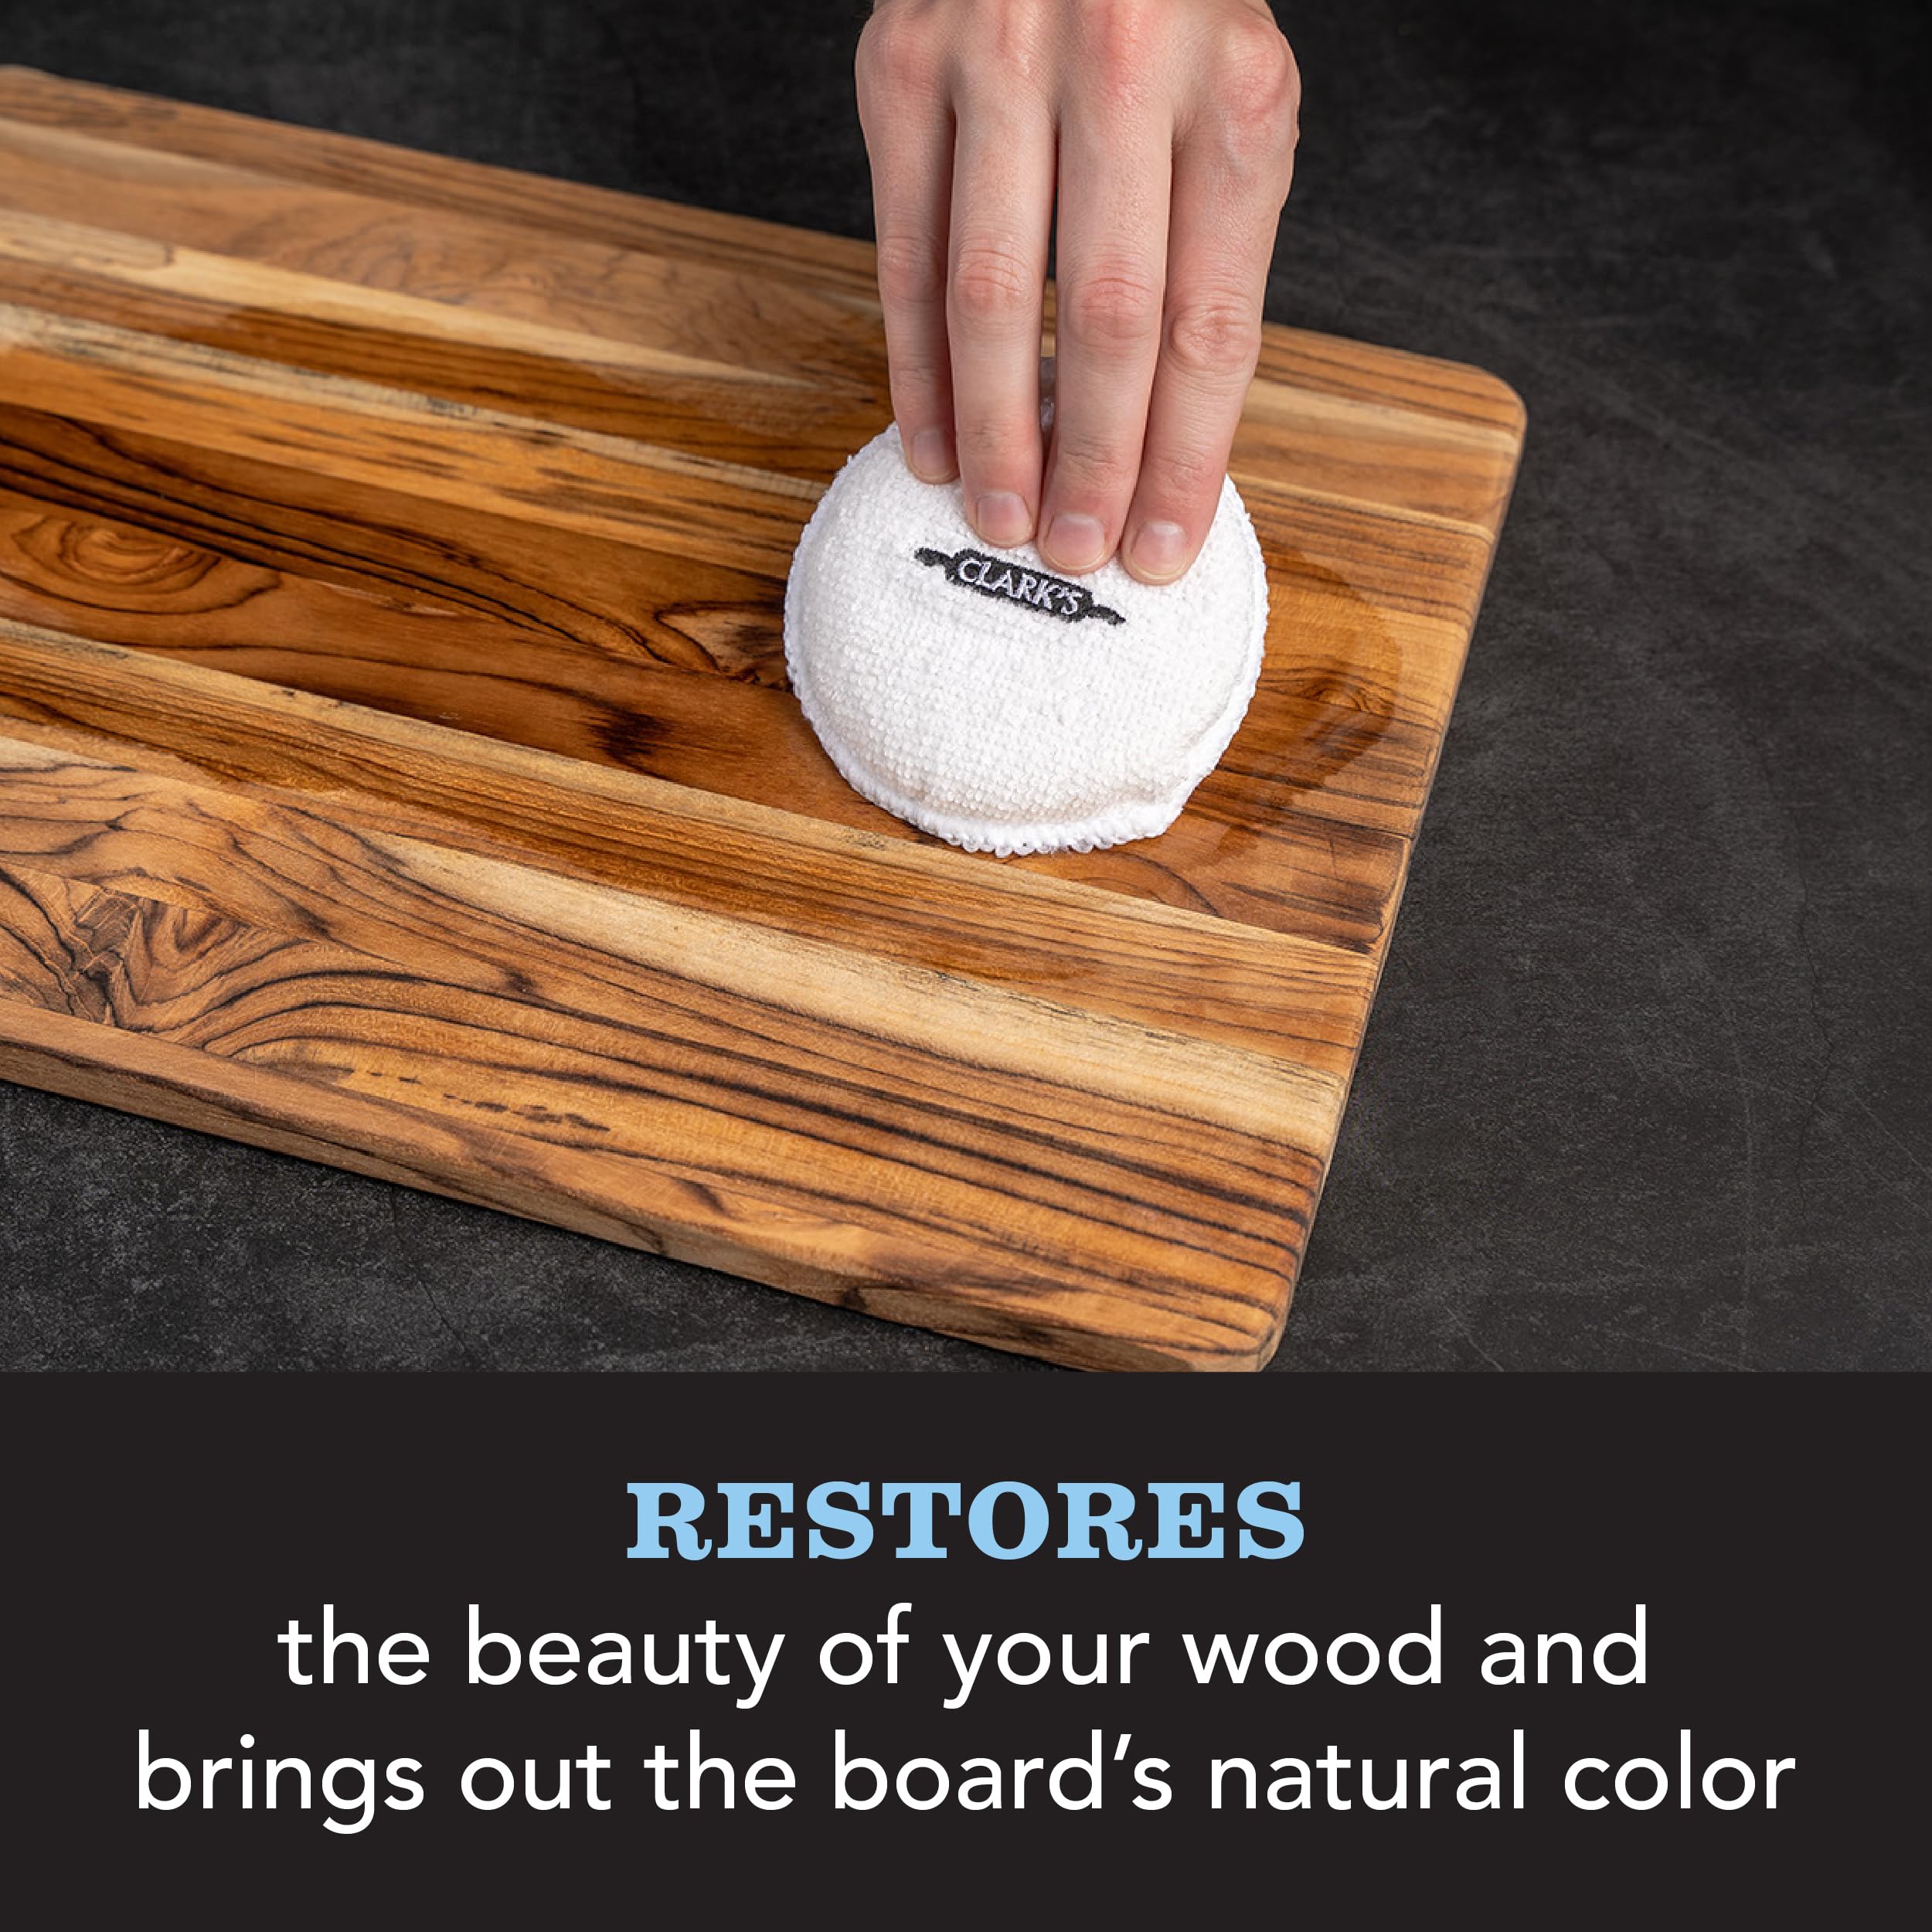 CLARK'S Coconut Cutting Board Oil - Refined for Kitchen Countertops - Butcher Blocks - Wooden Bowls - Clark's Cutting Board Oil - Seals Wood - Food Safe - No Mineral Oil - Clark Brush Compatible